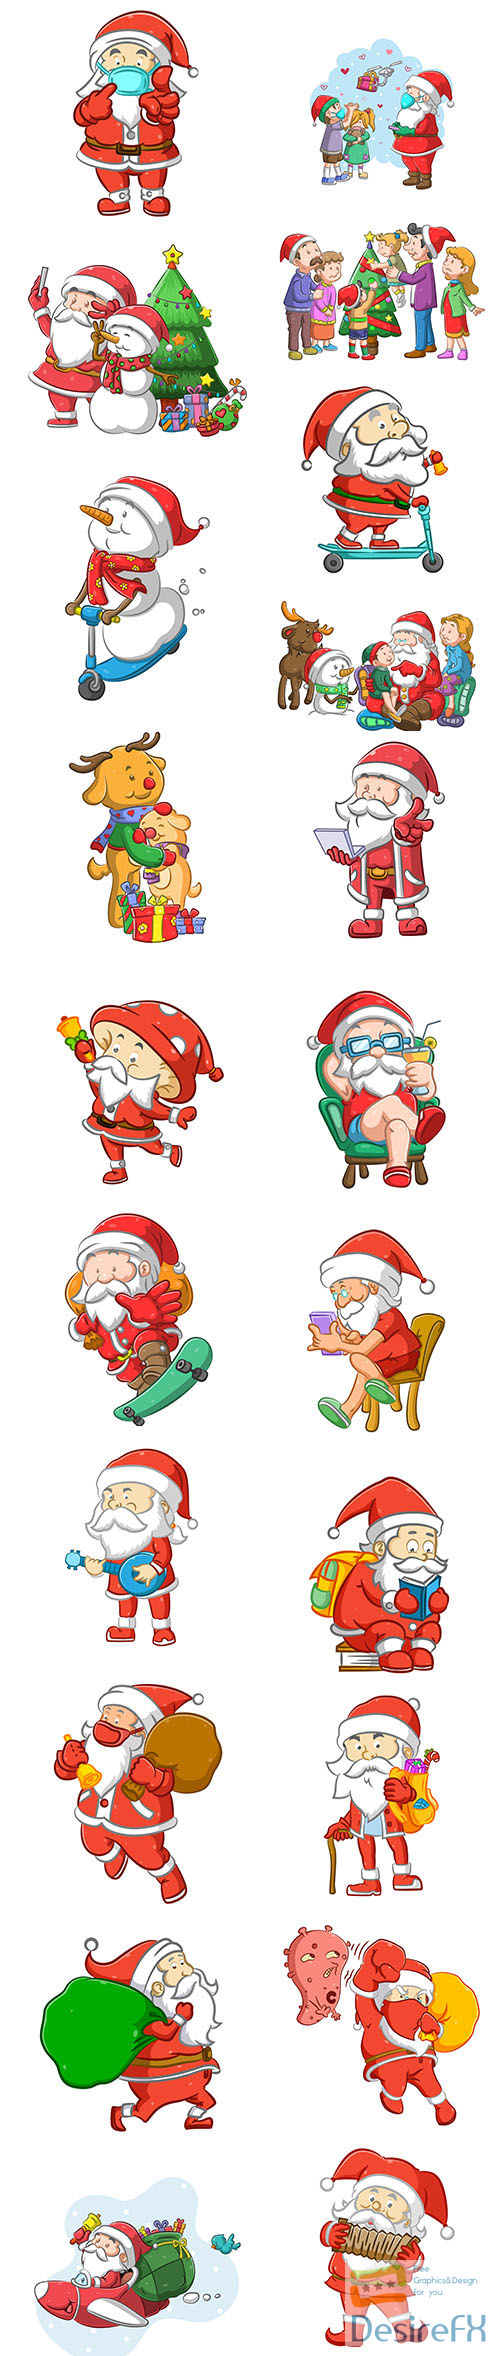 Santa Claus and Snowman illustrations